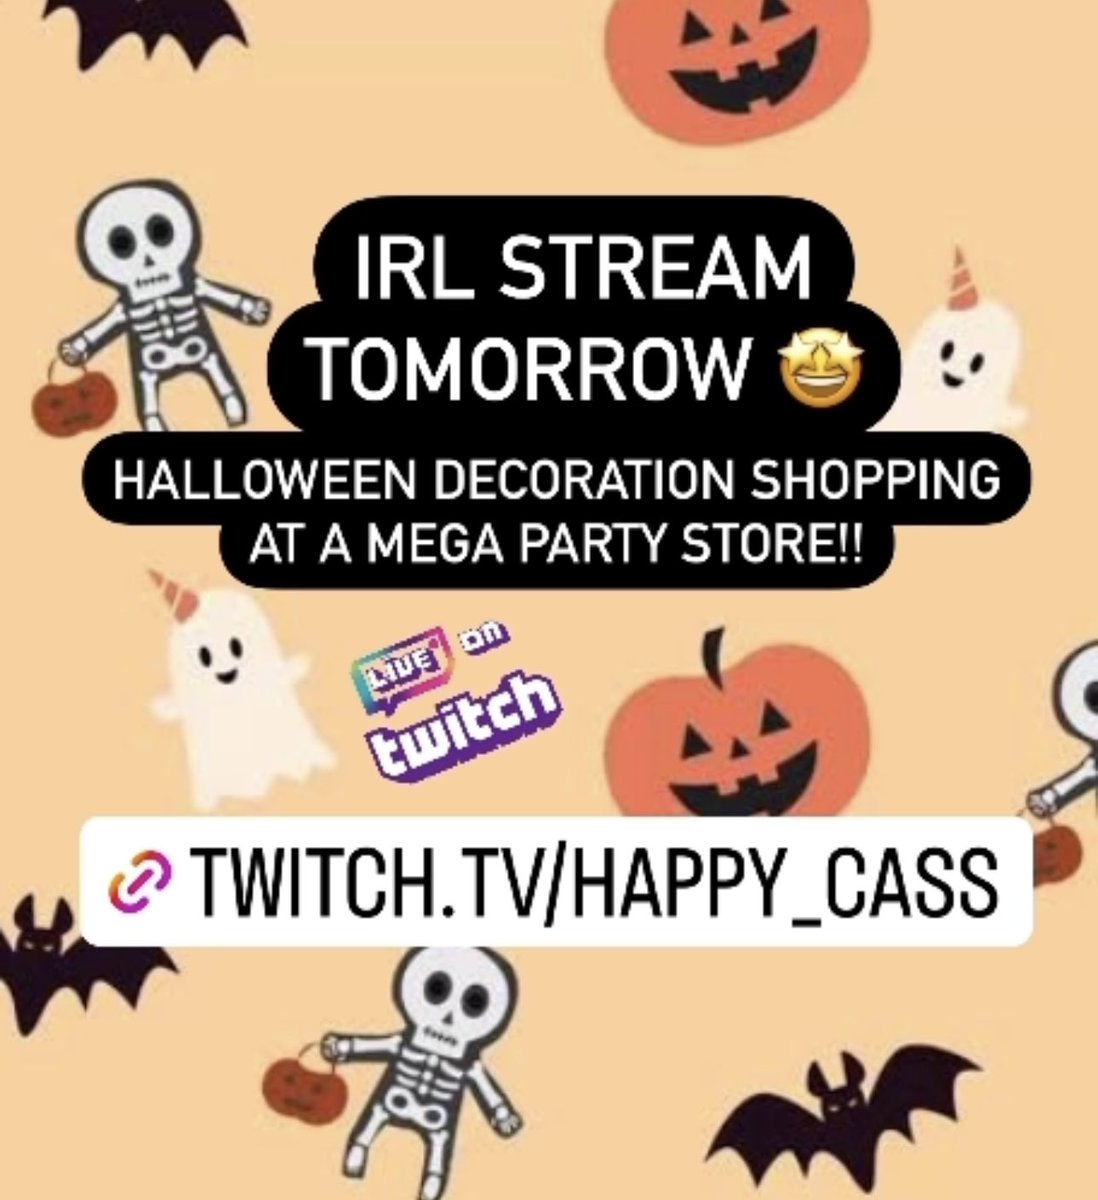 ‼️ IRL STREAM TOMORROW ‼️
⏰ AUS 11th Oct 1:30pm AEST ⏰
🎃 Halloween Shopping 🎃
💜 twitch.tv/happy_cass 💜

#Twitch #TwitchStreamer #TwitchAffiliate #Gaming #TwitchANZ #Streamer #Happy_Cass #Australia #Halloween #Shopping #LiveStream #LiveStreaming #IRL #PartyDecorations